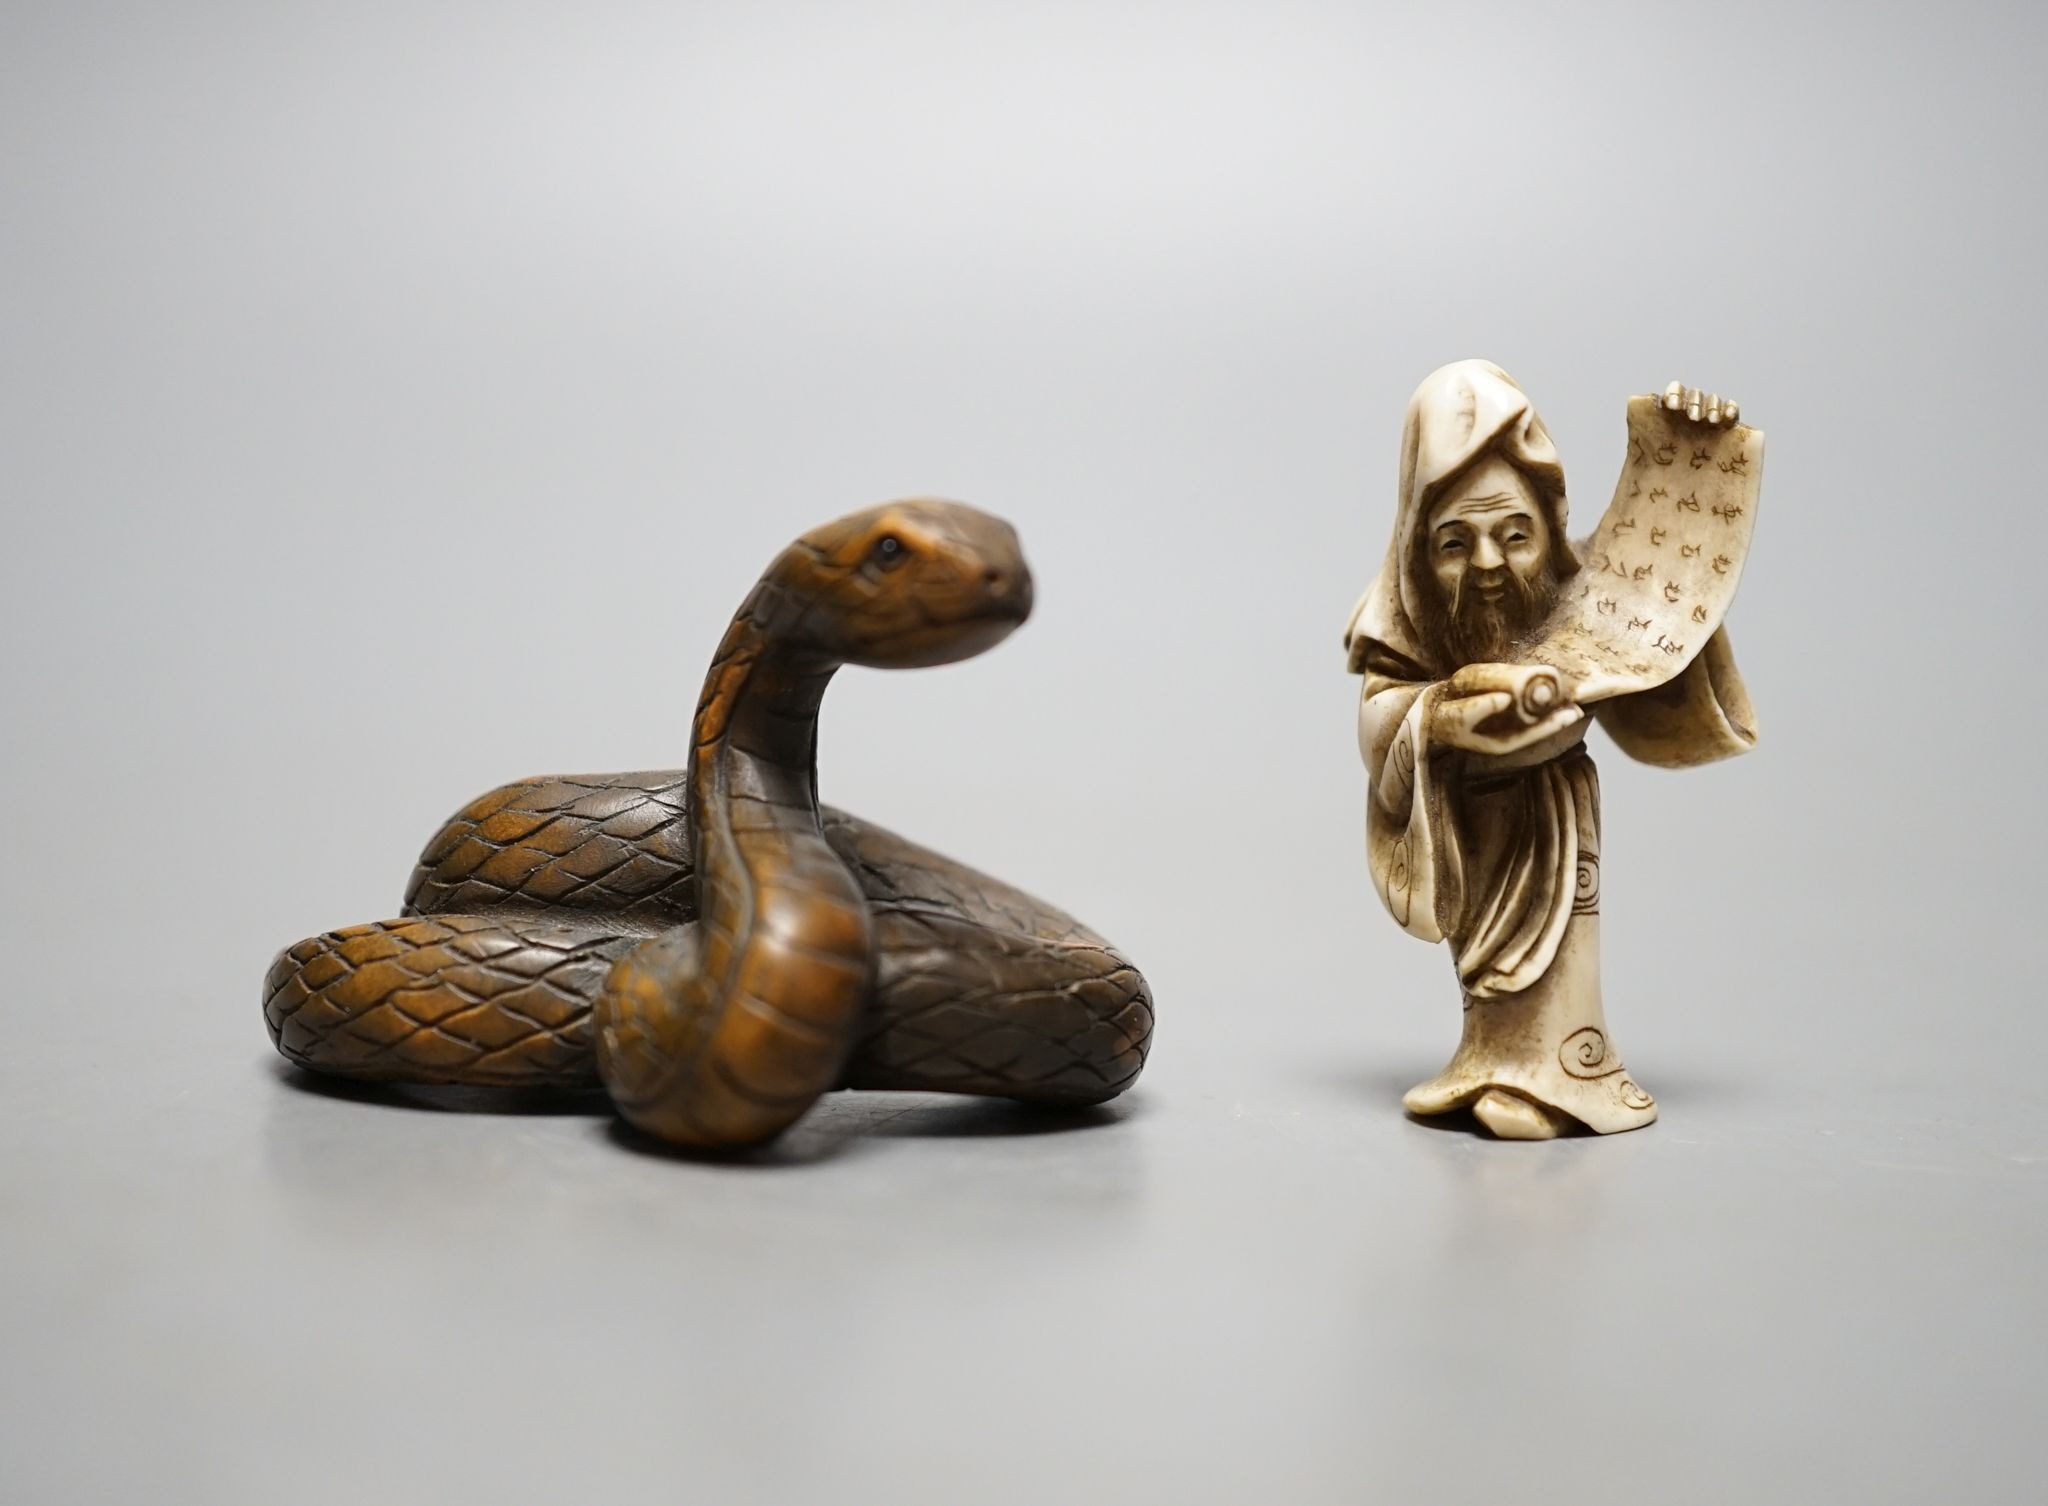 A Japanese ivory figure of a sage and a signed carved wood snake netsuke, 5cm long